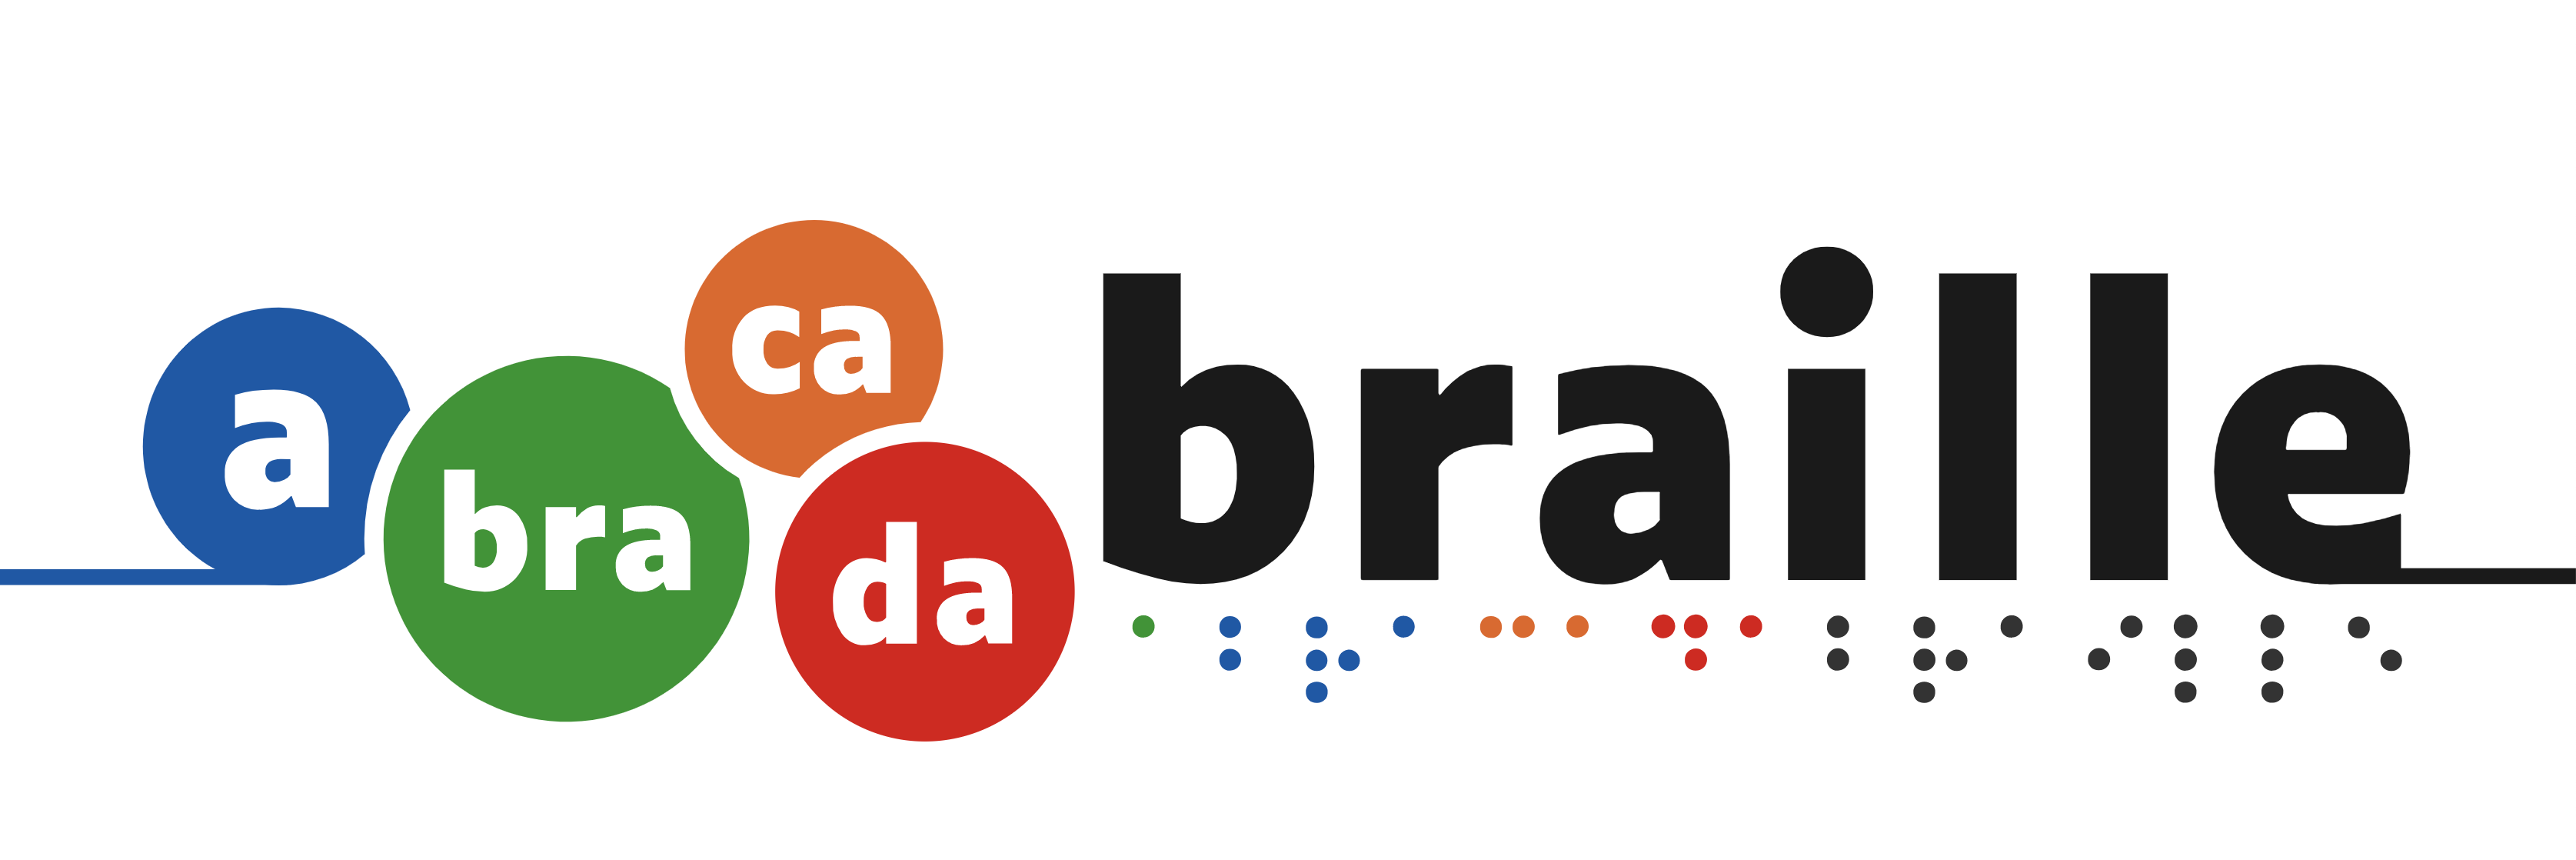 Abracada braille logo